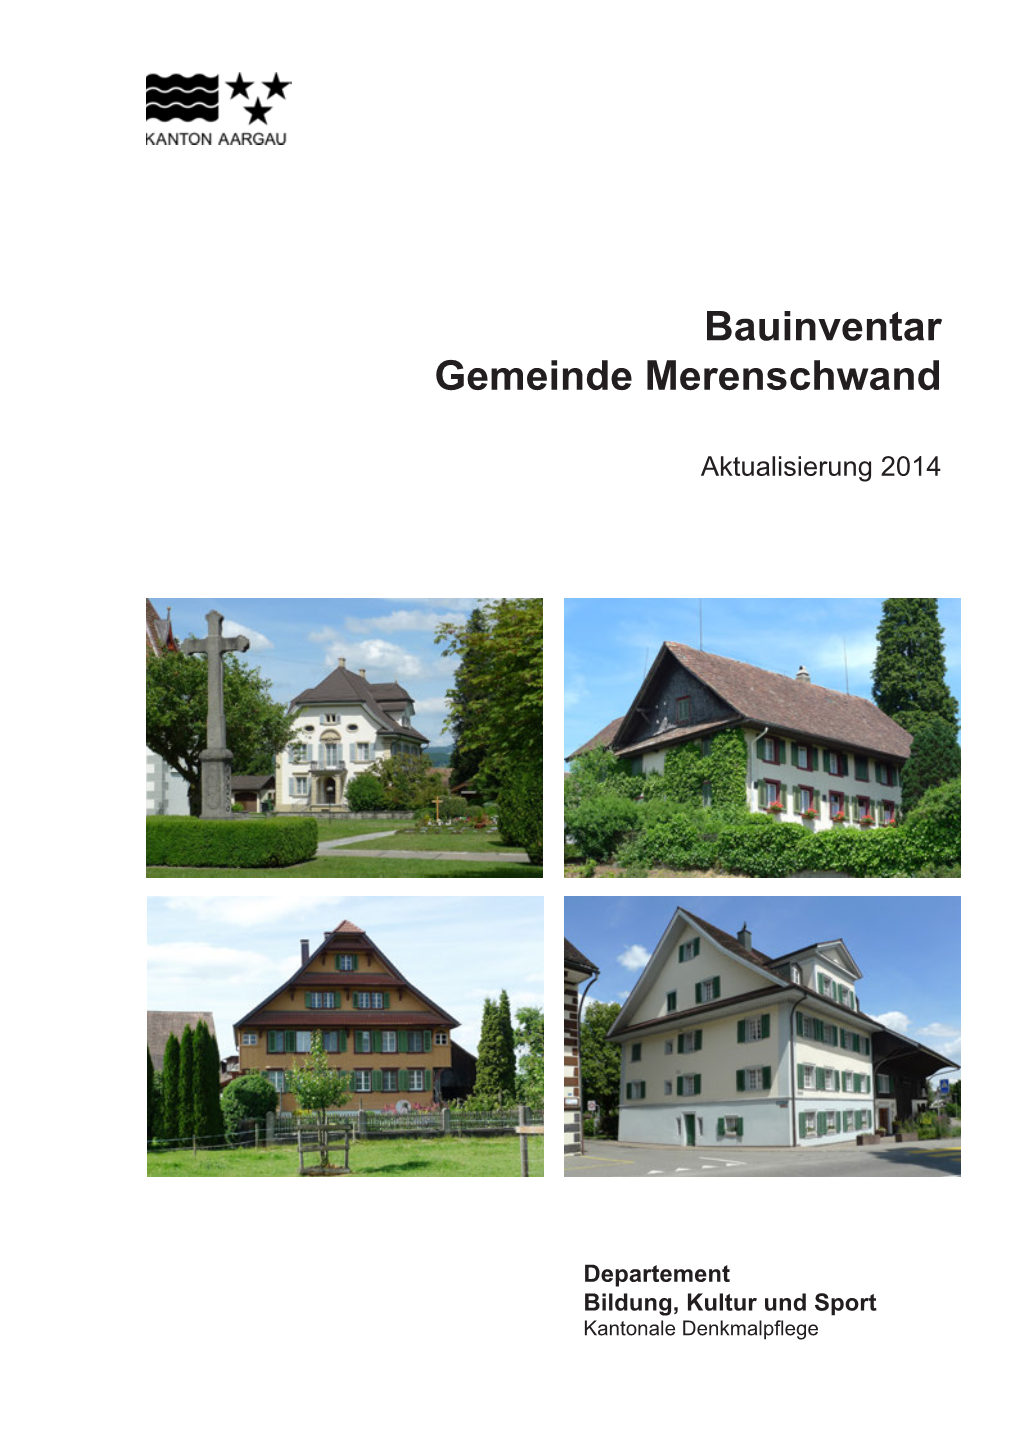 Bauinventar Kantonale Denkmalpflege 2014